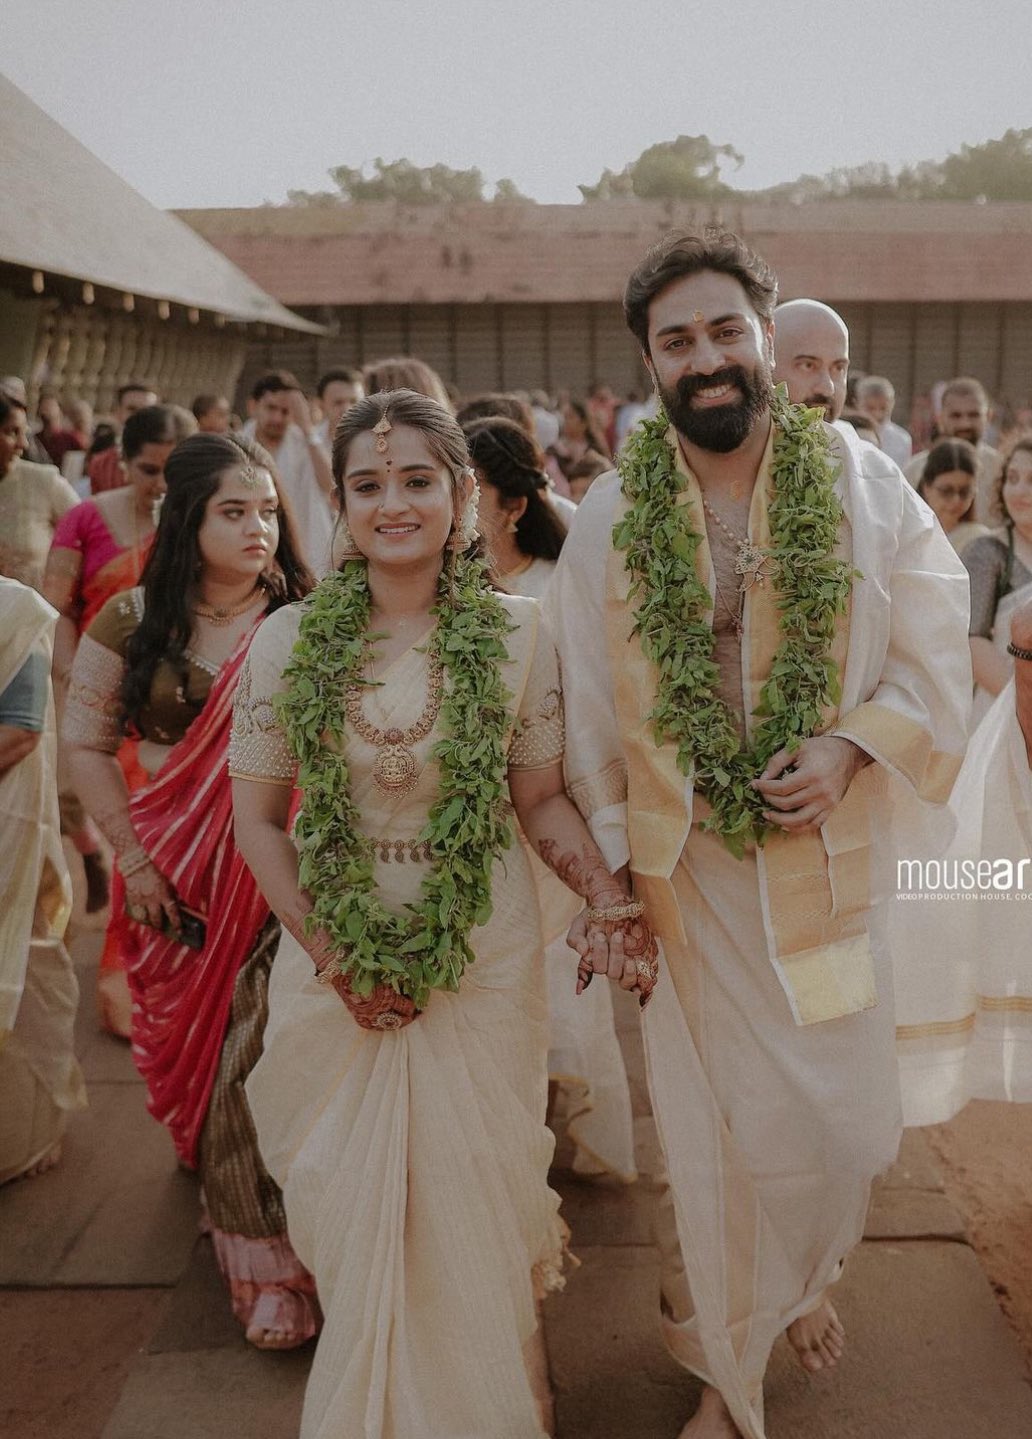 Christopher Kanagaraj on X: "Malayalam Actor/TV Host Govind Padmasoorya And Gopika Anil Tie The Knot In A Wedding Ceremony At Vadakkunnathan Temple. https://t.co/QkaK0Brmmi" / X